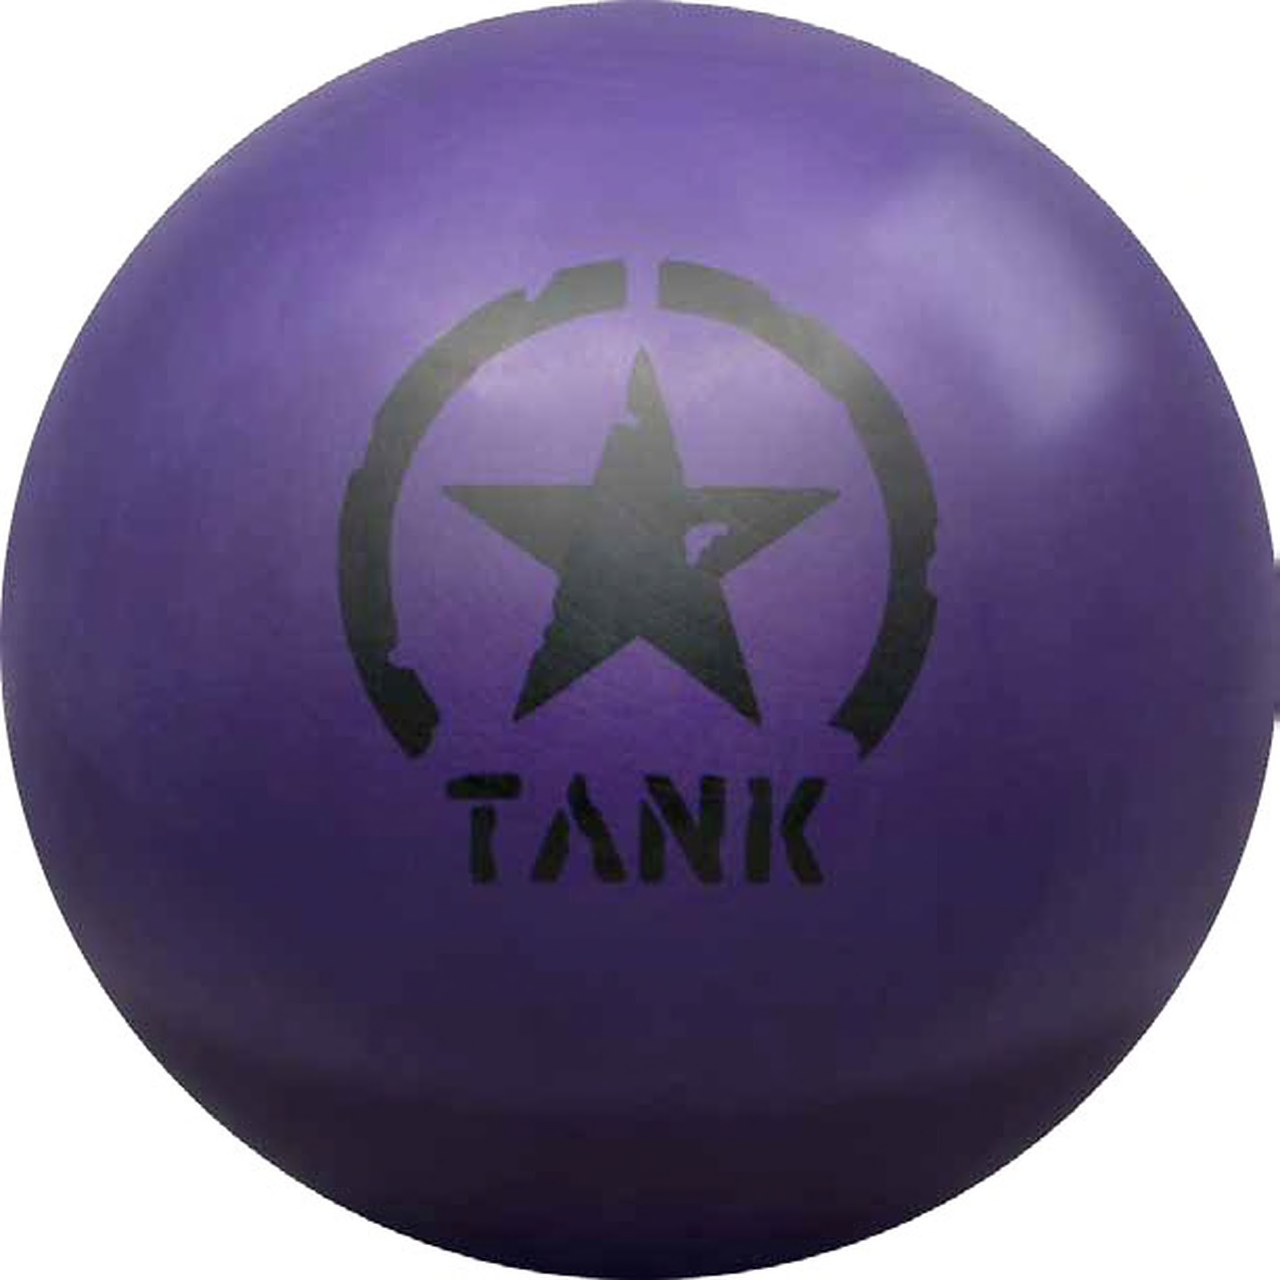 Motiv Purple Tank Bowling Ball